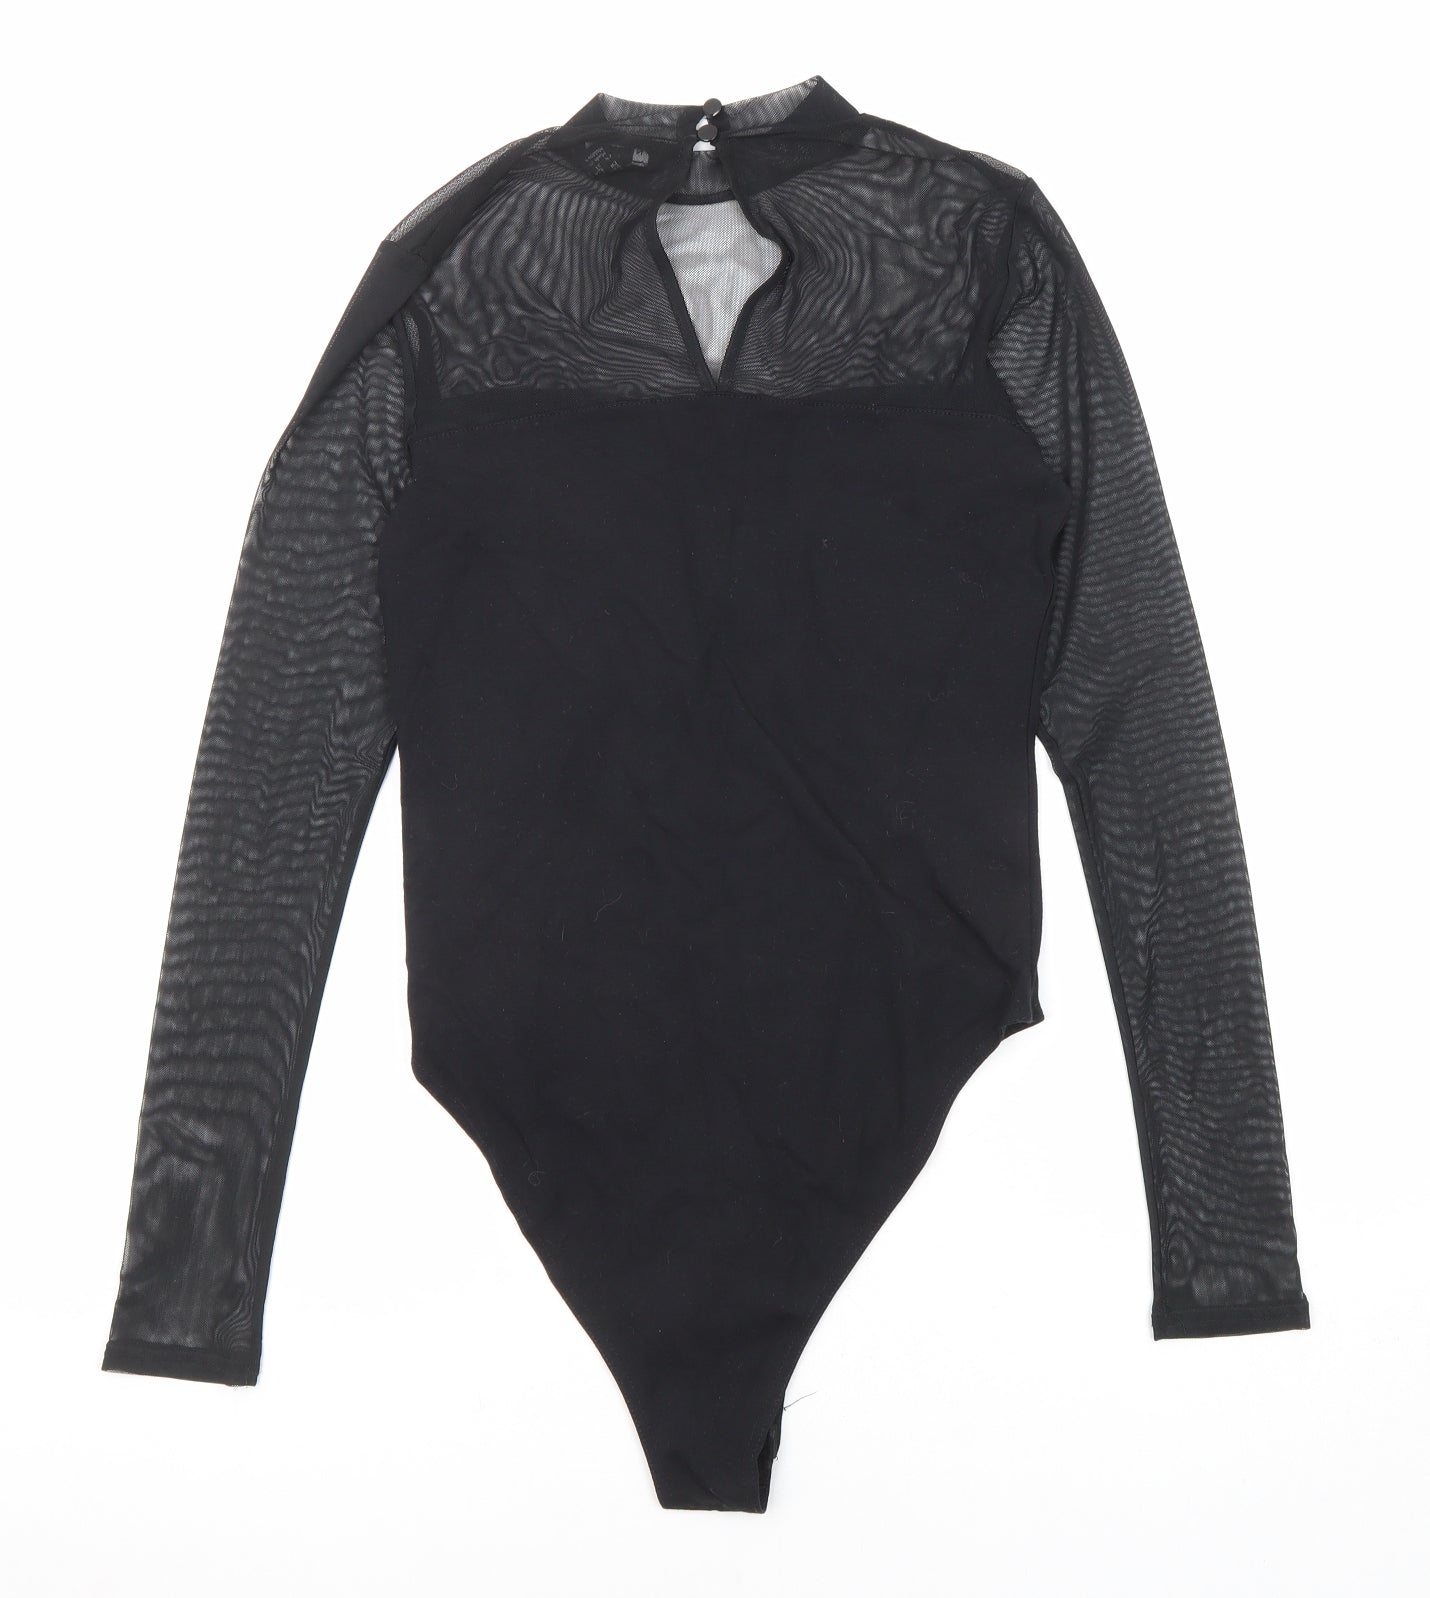 New Look Womens Black Cotton Bodysuit One-Piece Size 12 Snap